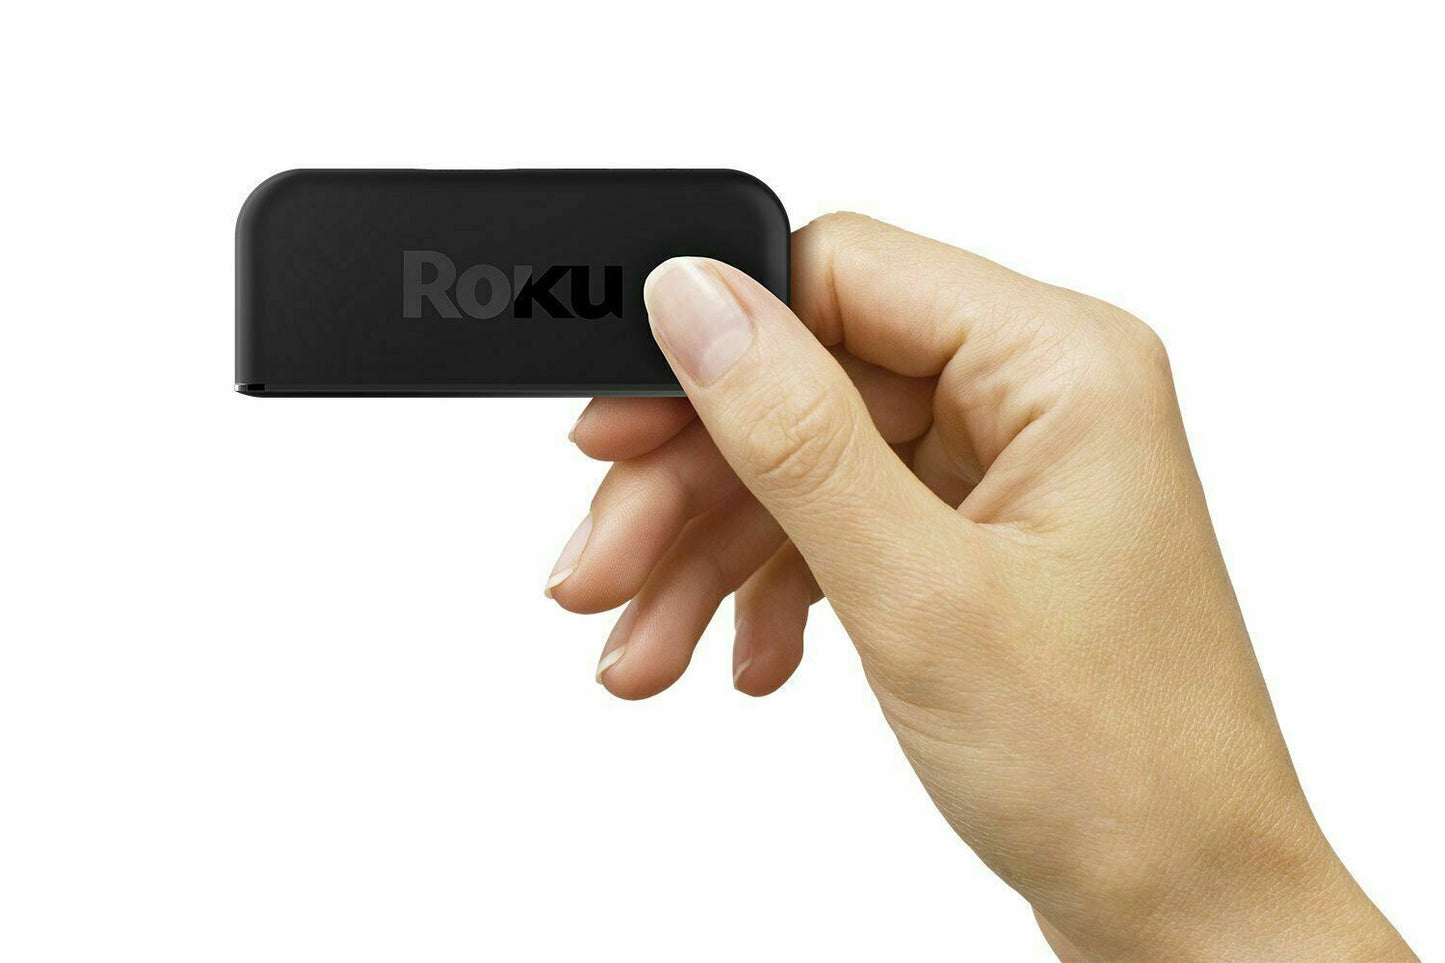 2020 ROKU Premiere 4K Ultra HD HDR Streaming for Netflix Plex Amazon Prime Video